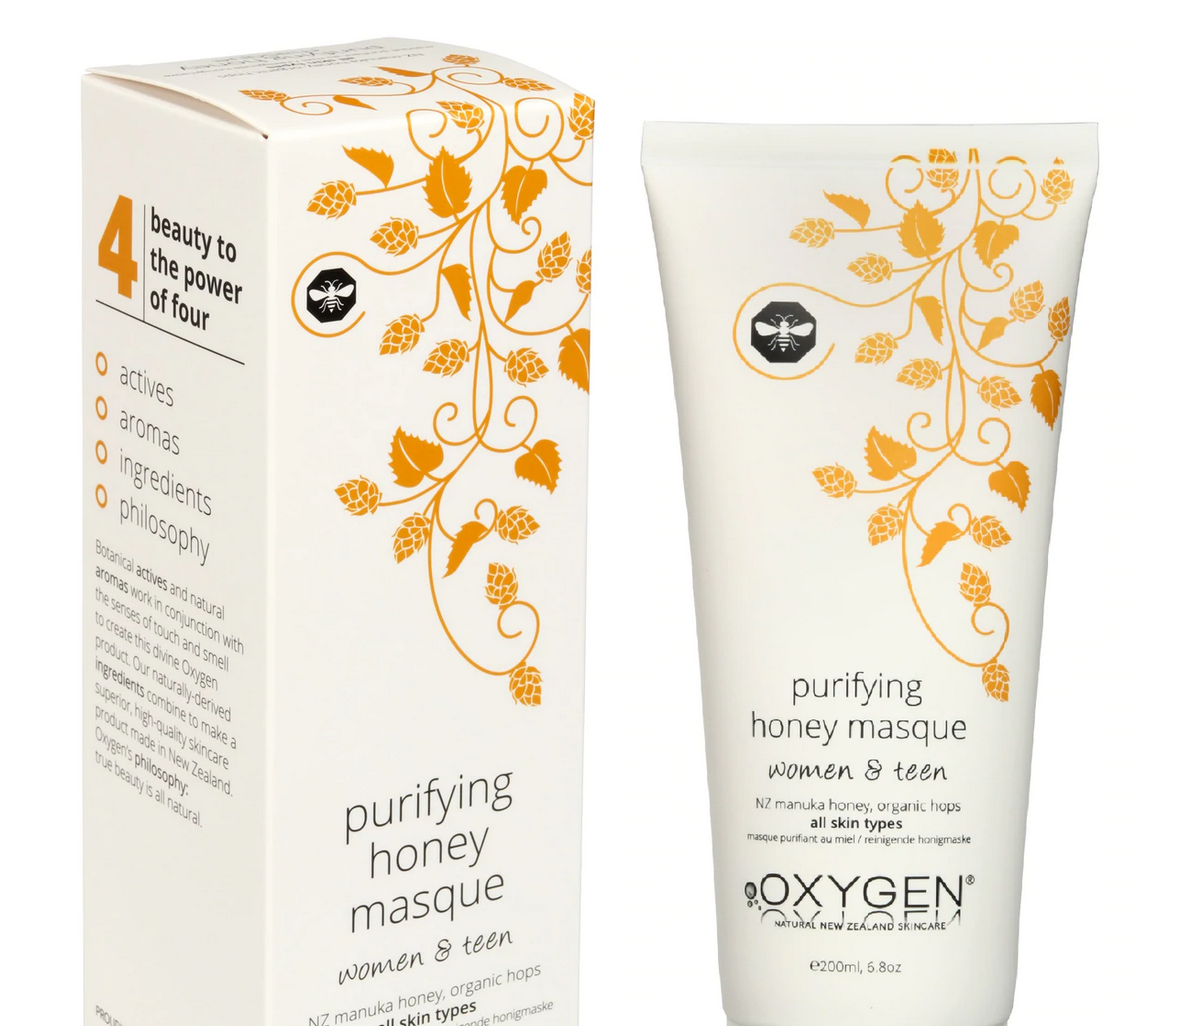 Oxygen - Purifying manuka honey masque for all skin types